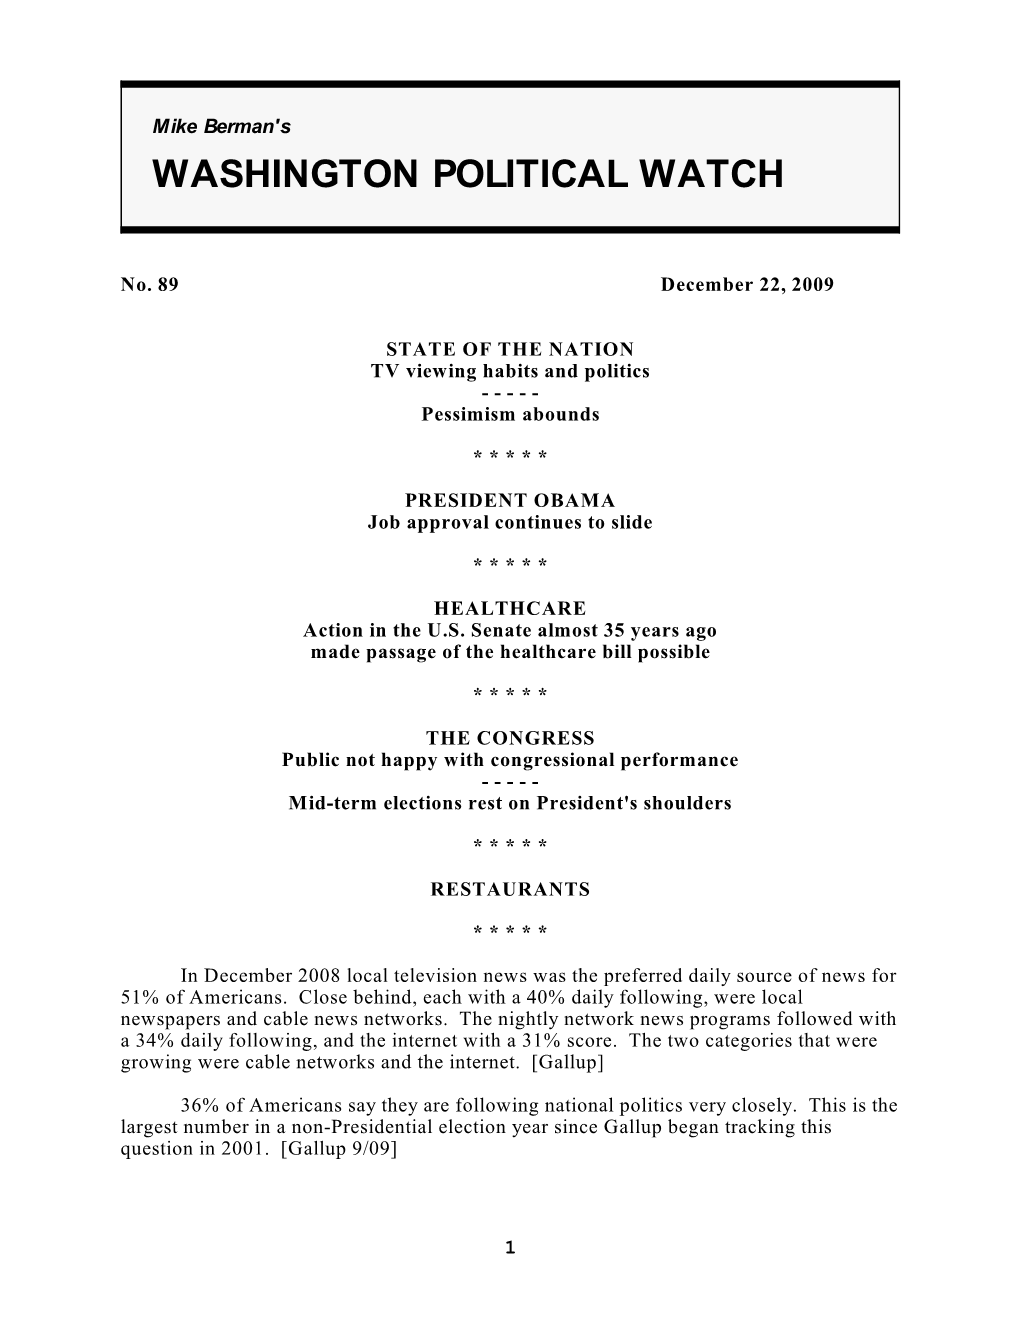 Washington Political Watch